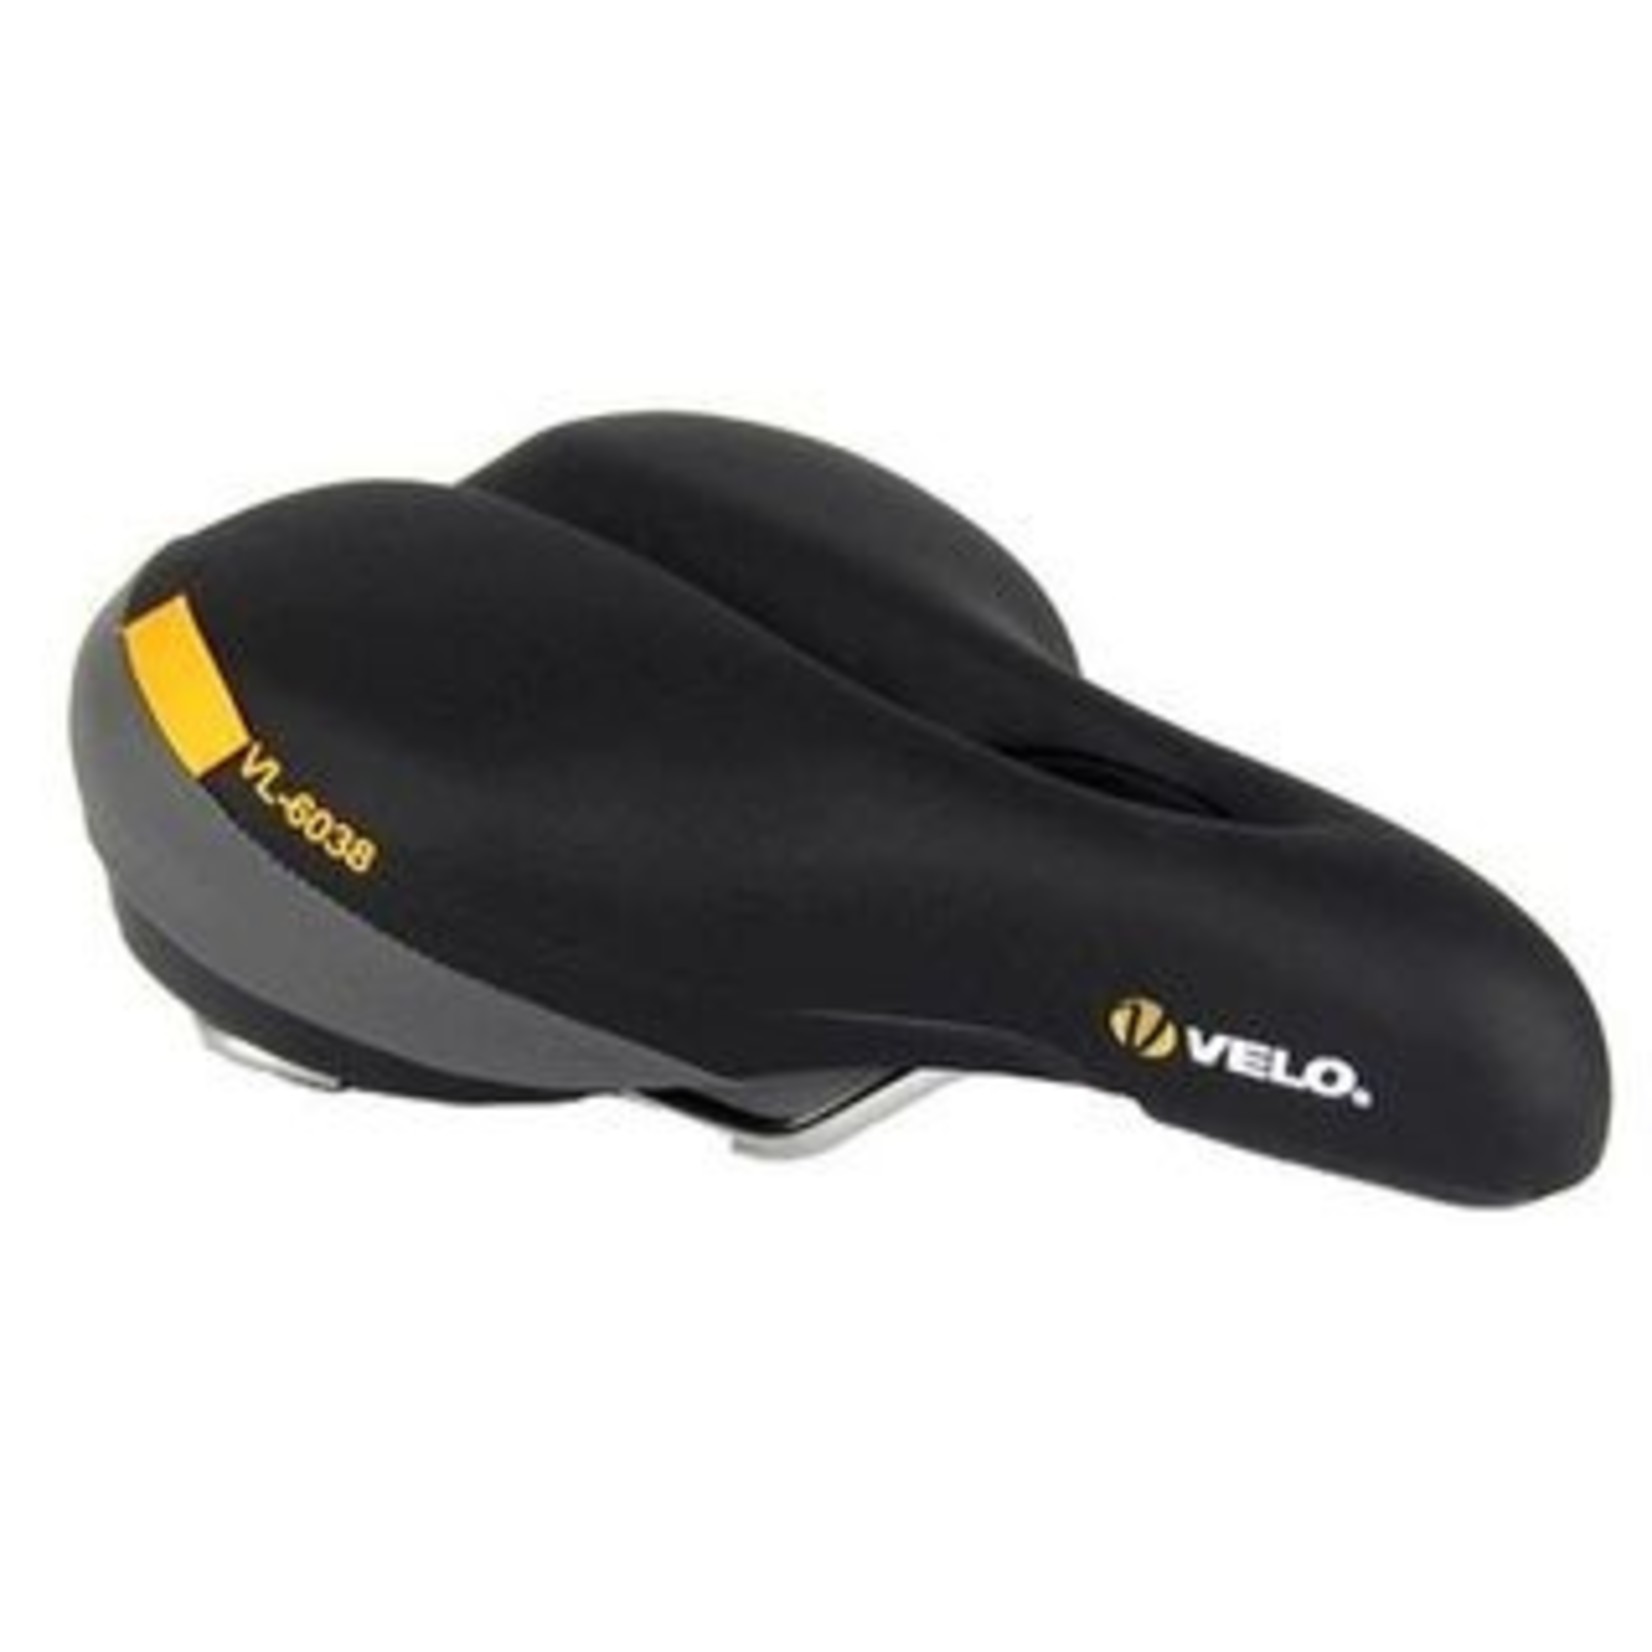 Velo Velo - Bike/Cycling Saddle - Women's Plush Wide & Comfortable - 239 x 187mm